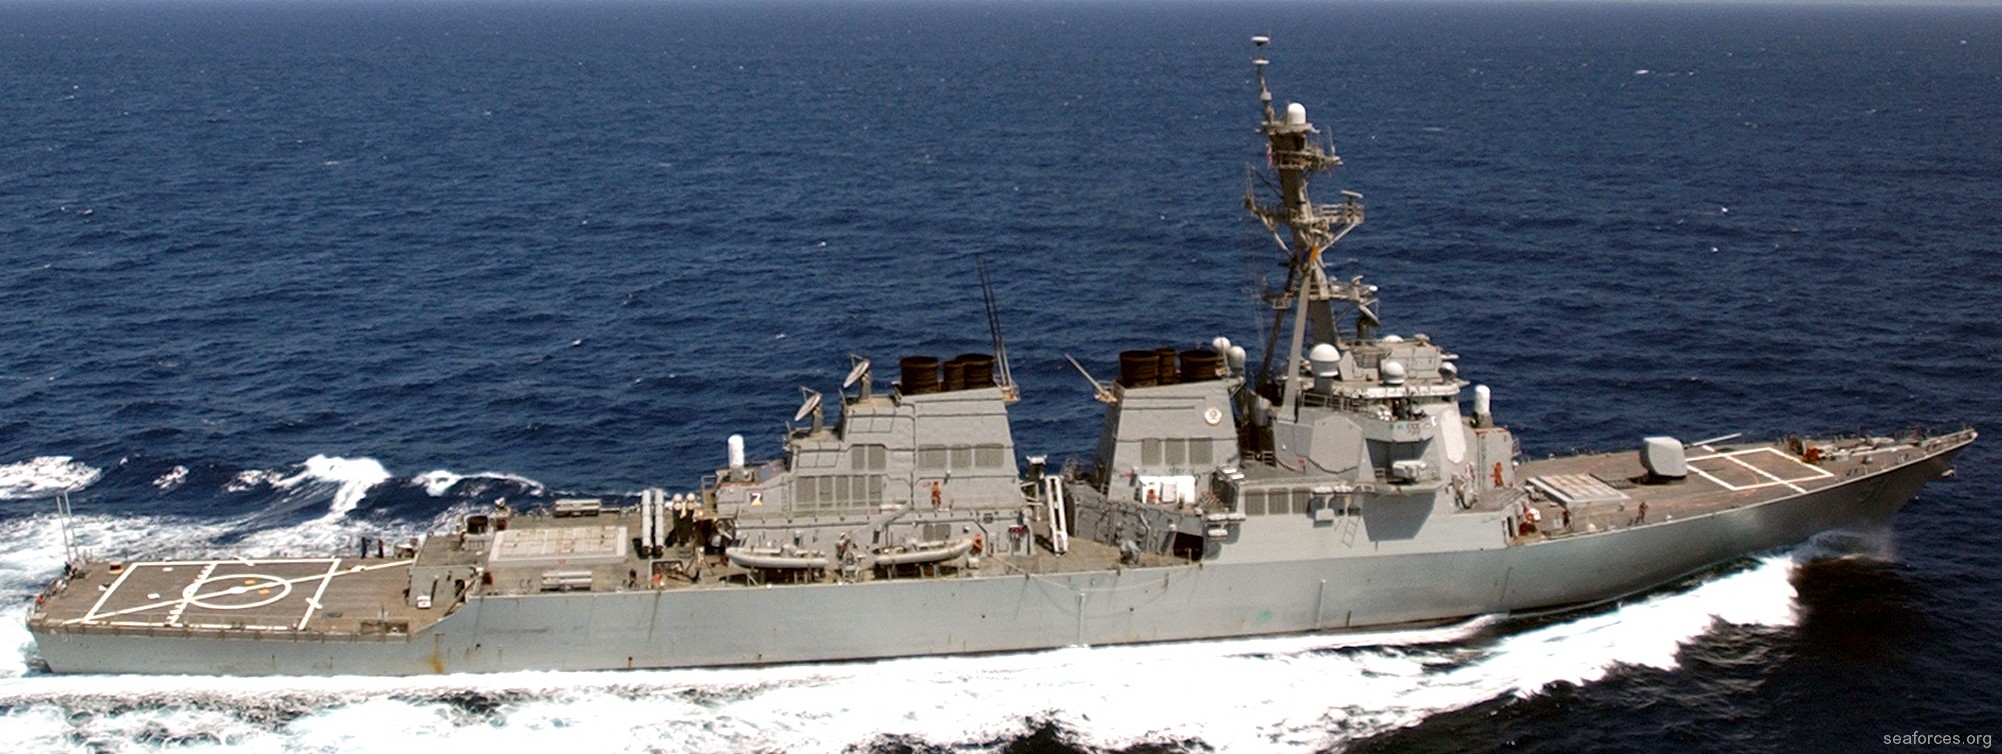 ddg-51 uss arleigh burke destroyer us navy 61 central command aor